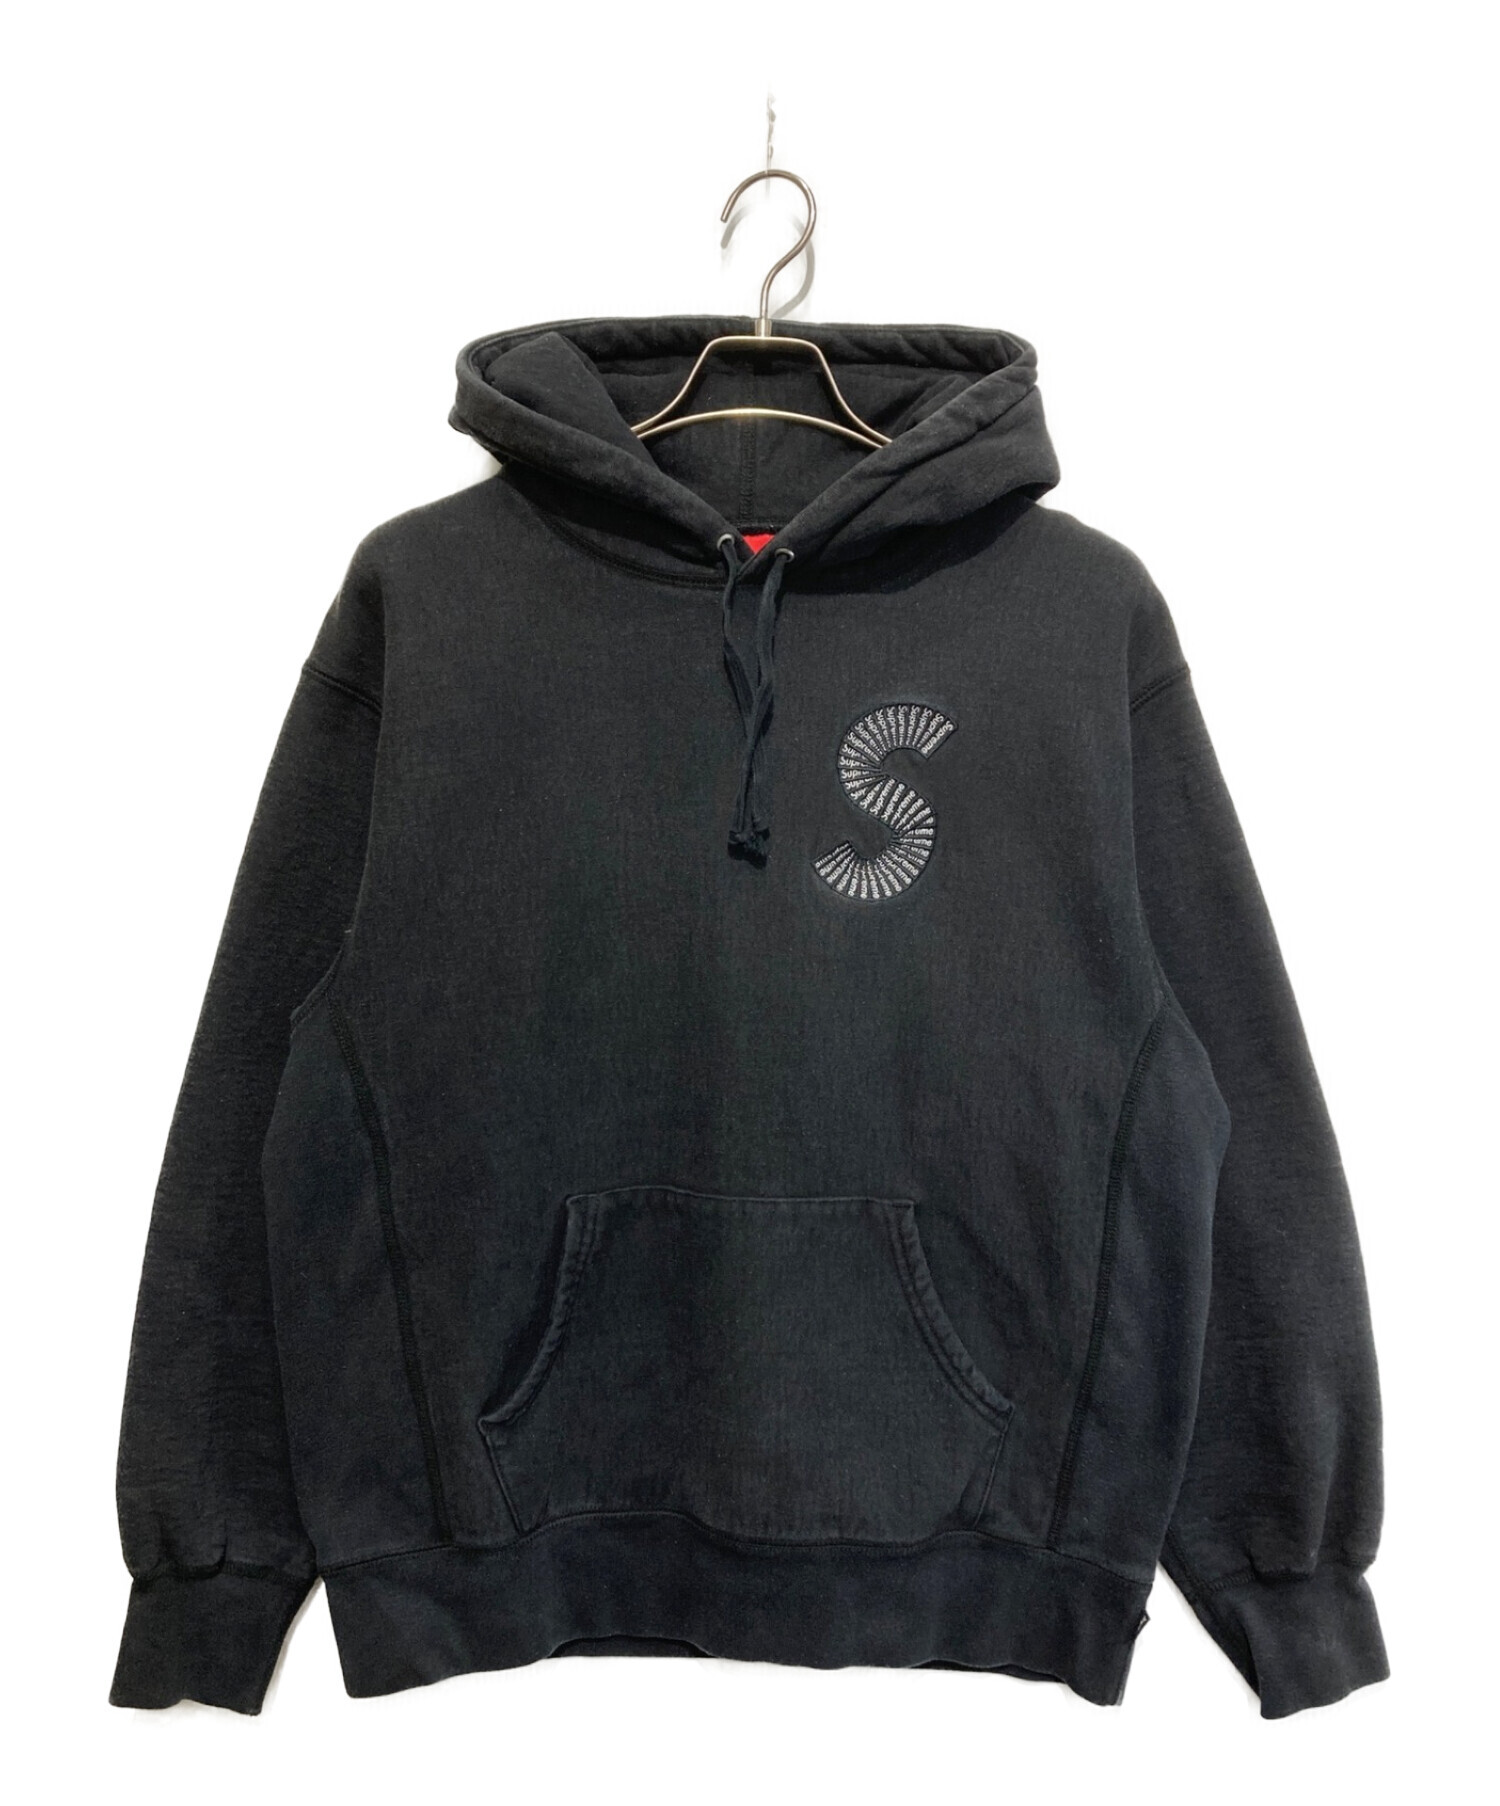 Supreme S Logo Hooded Sweatshirt Black M